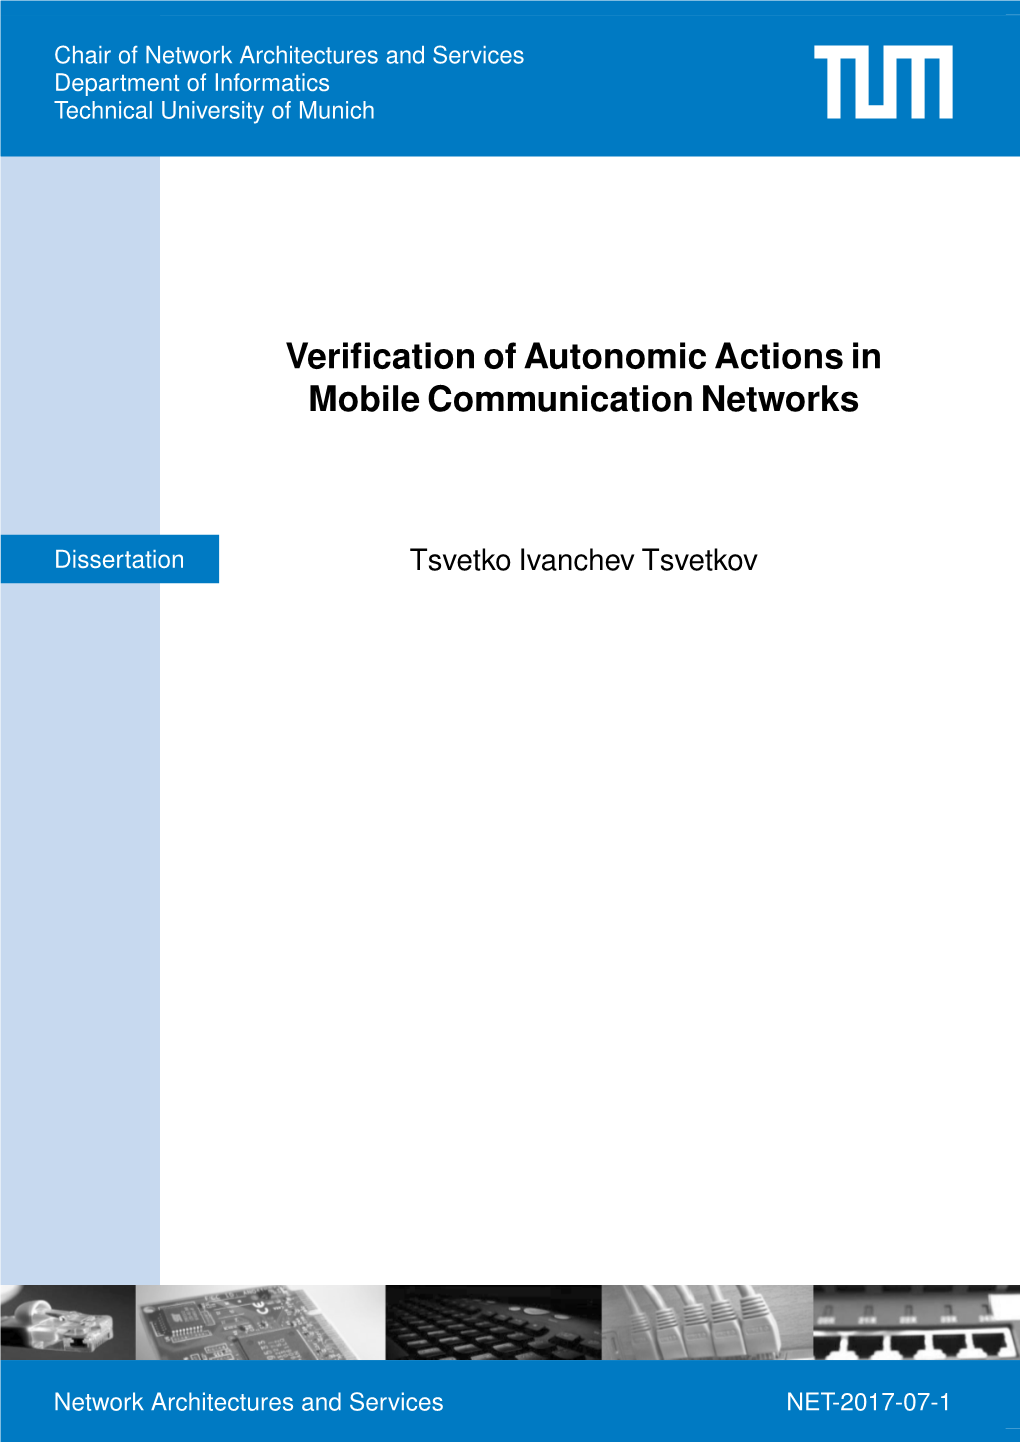 Verification of Autonomic Actions in Mobile Communication Networks